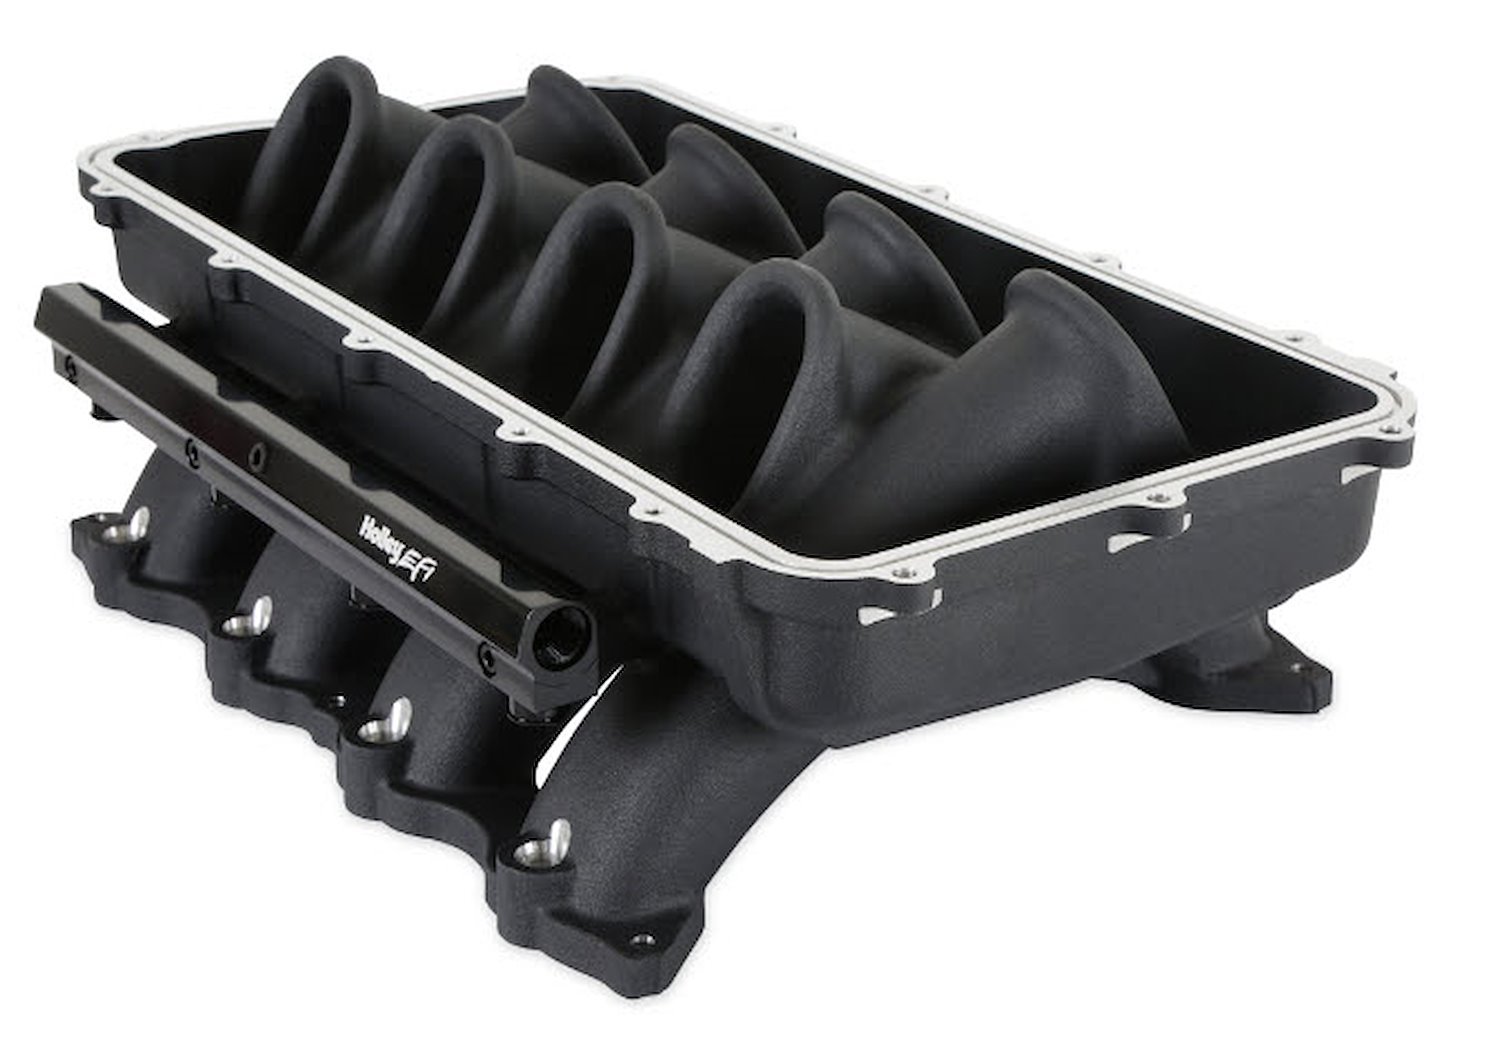 300-920BK Hi-Ram Modular Intake Manifold Base w/Fuel Rails for Ford Coyote Engines (Black)